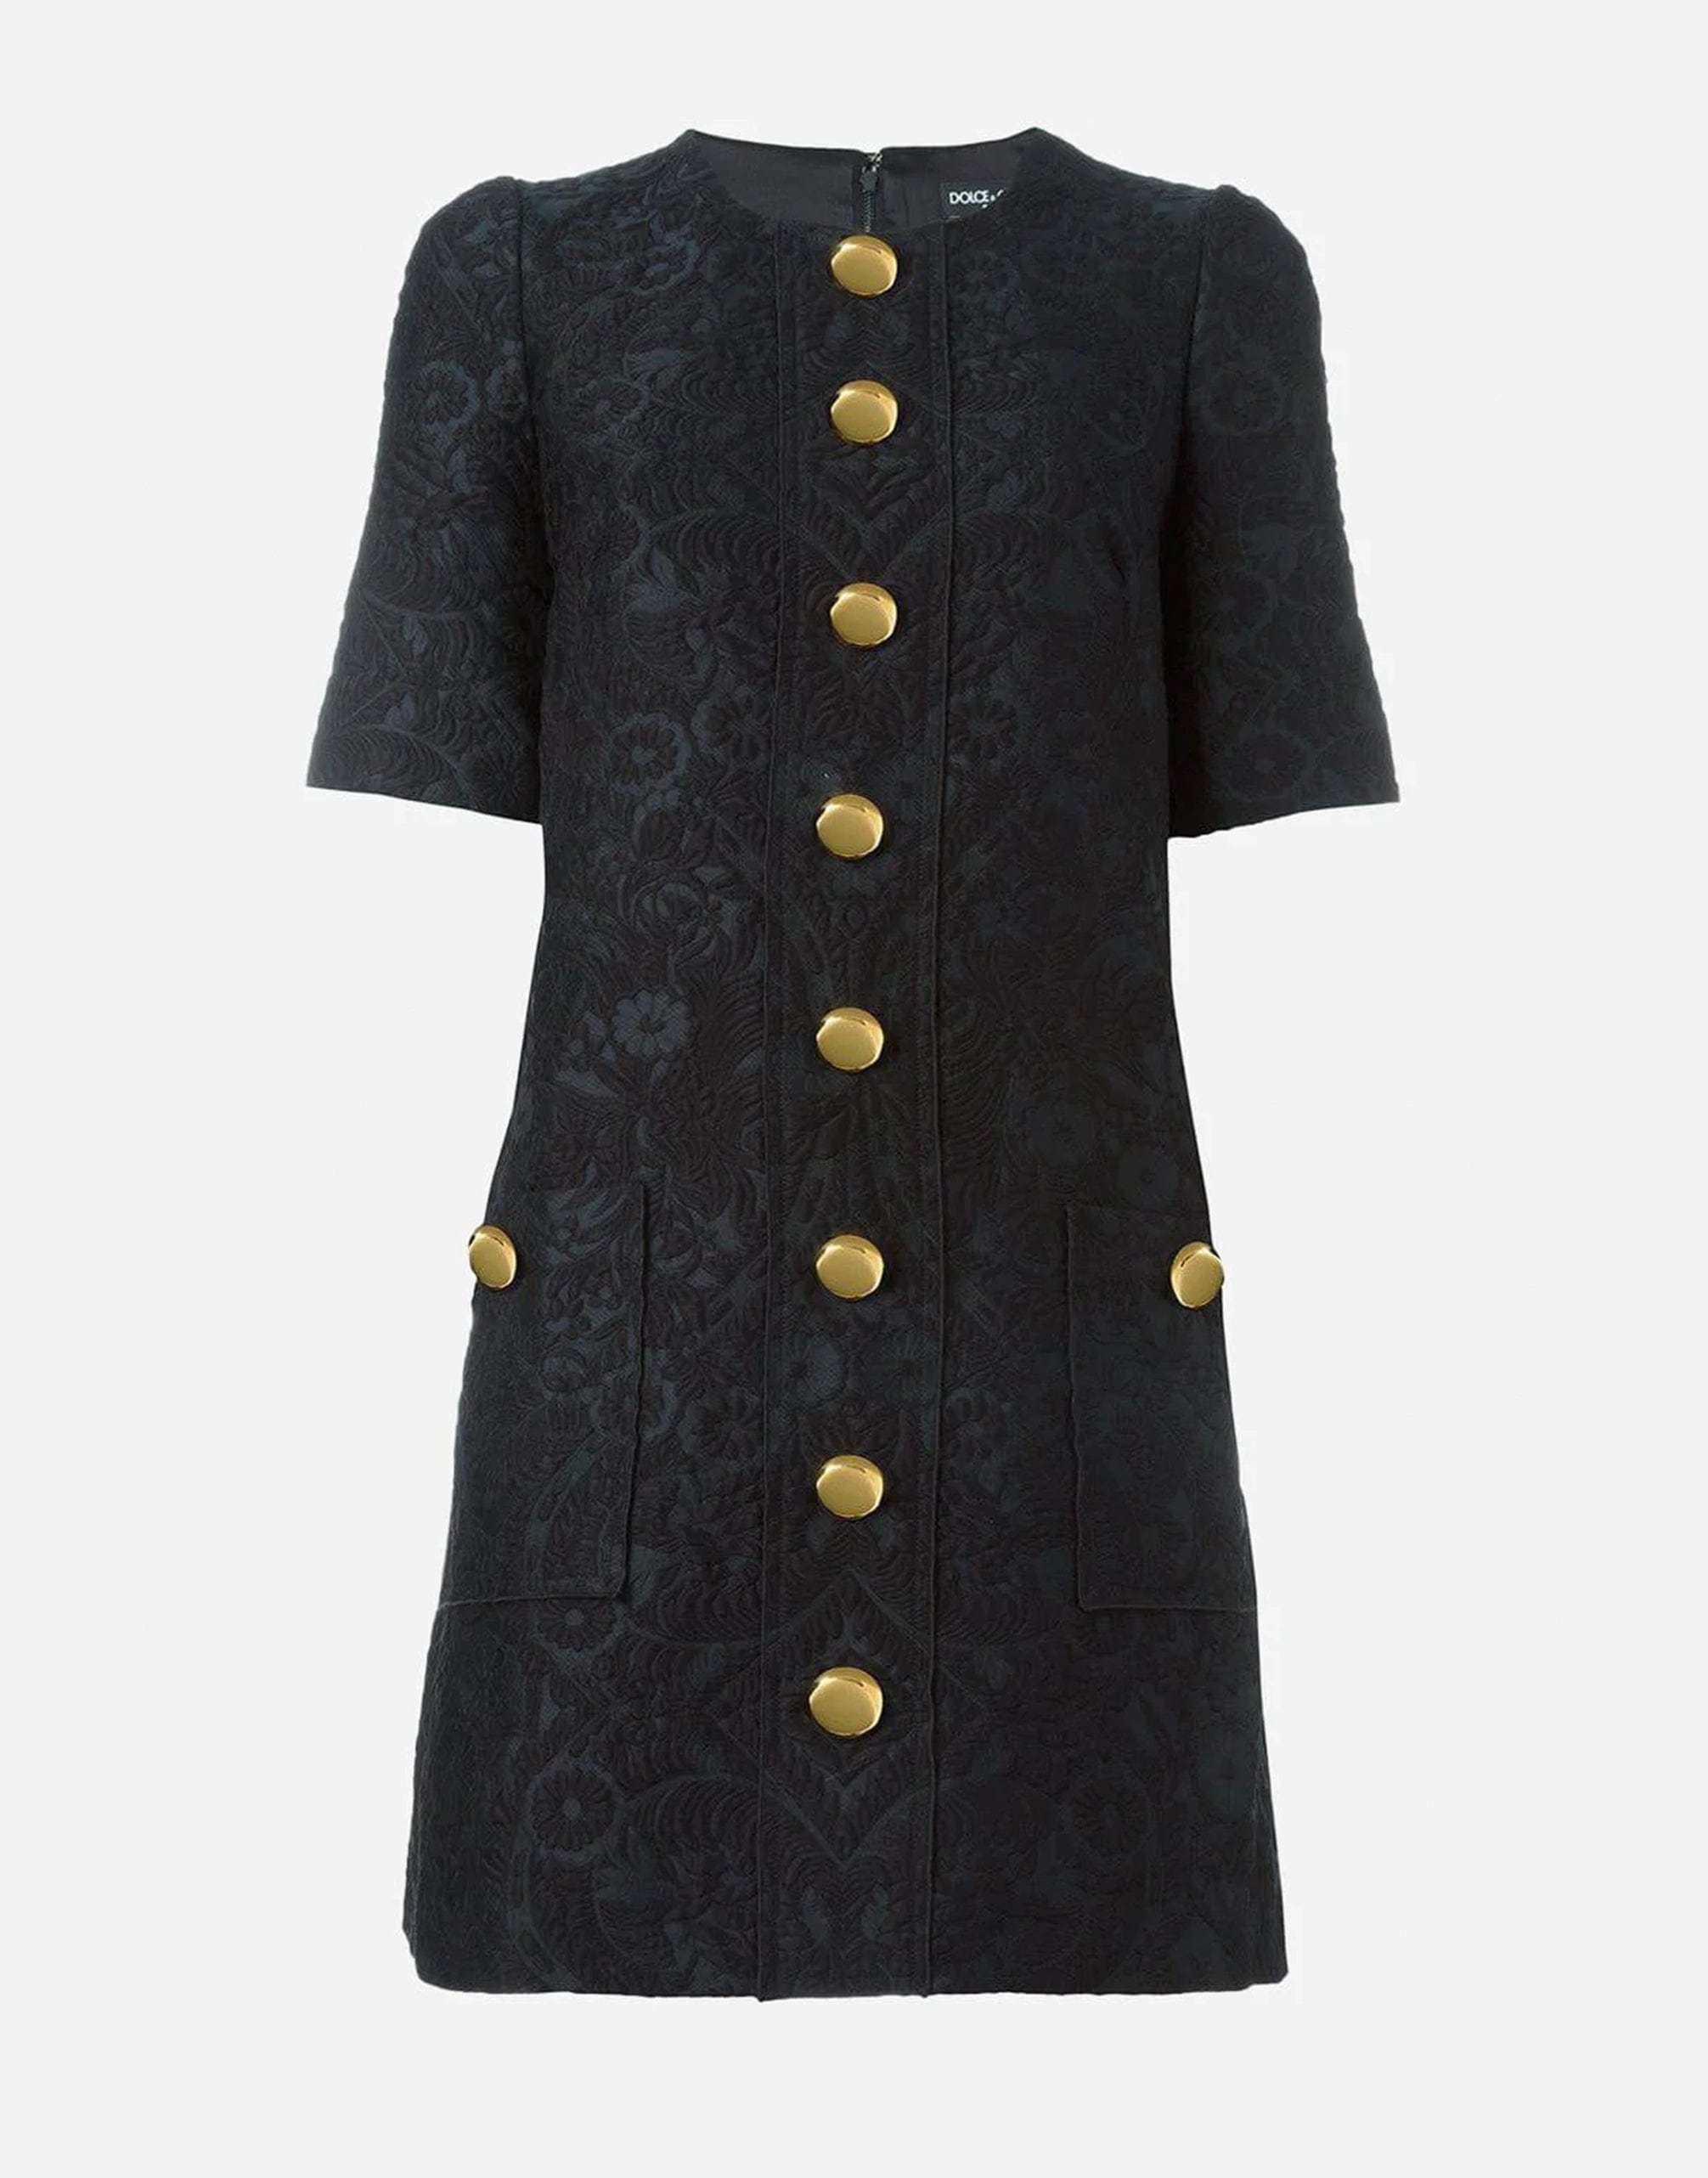 Dolce & Gabbana Jacquard Button-Embellished Mini Dress